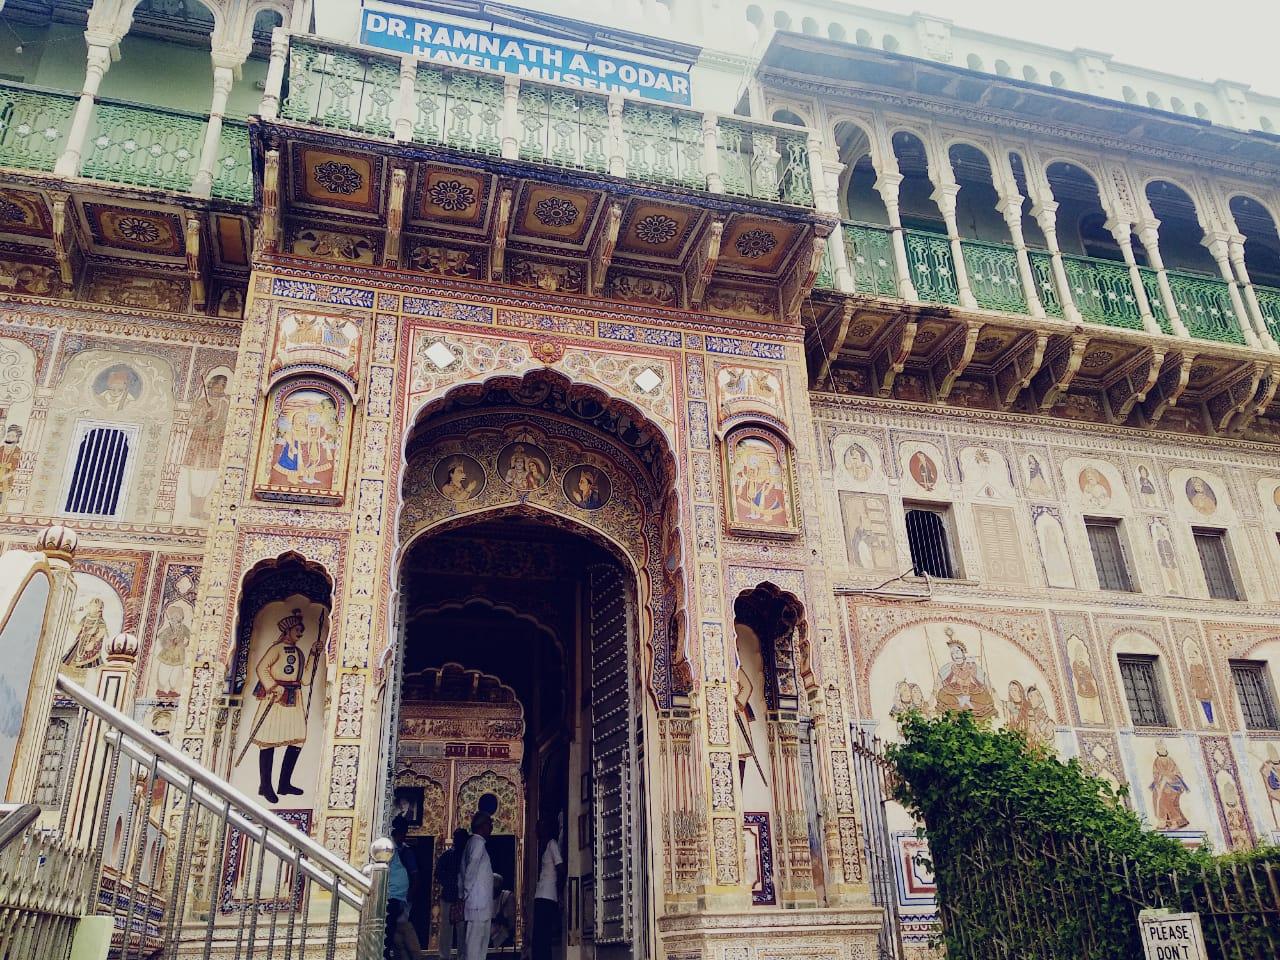 Entrance to Dr. Ramnath A. Podar Haveli Museum 